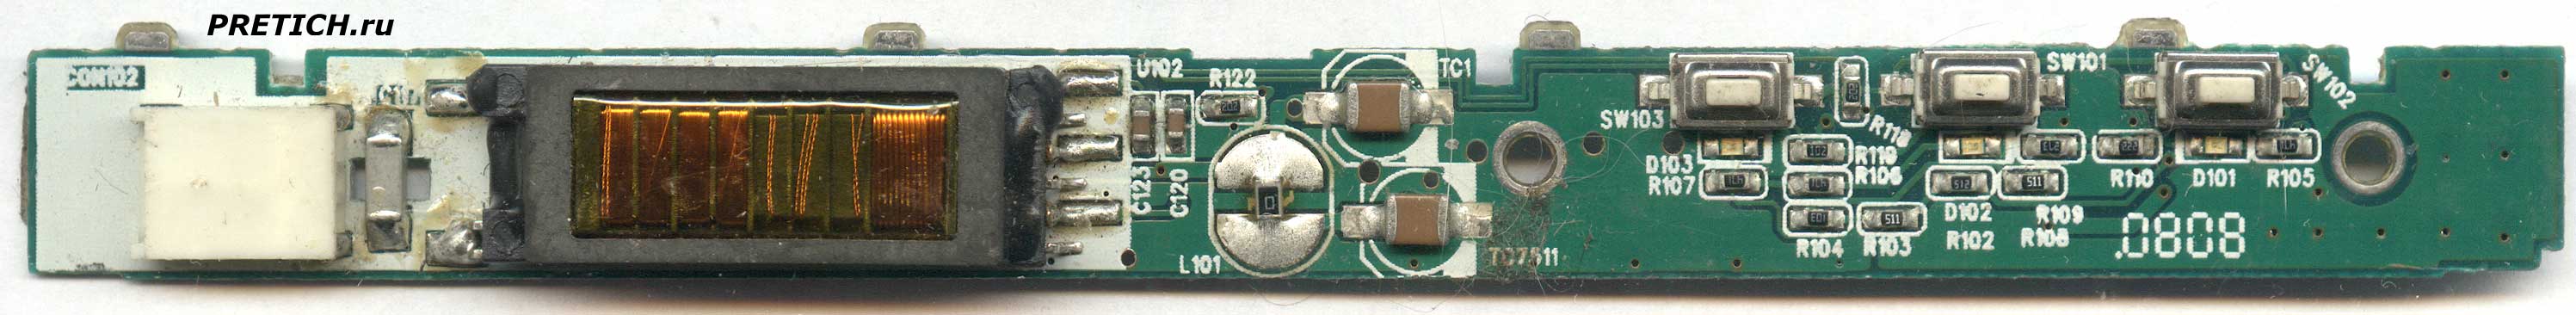 Skypine SD-9411 плата инвертора подсветки ЖК-дисплея, описание